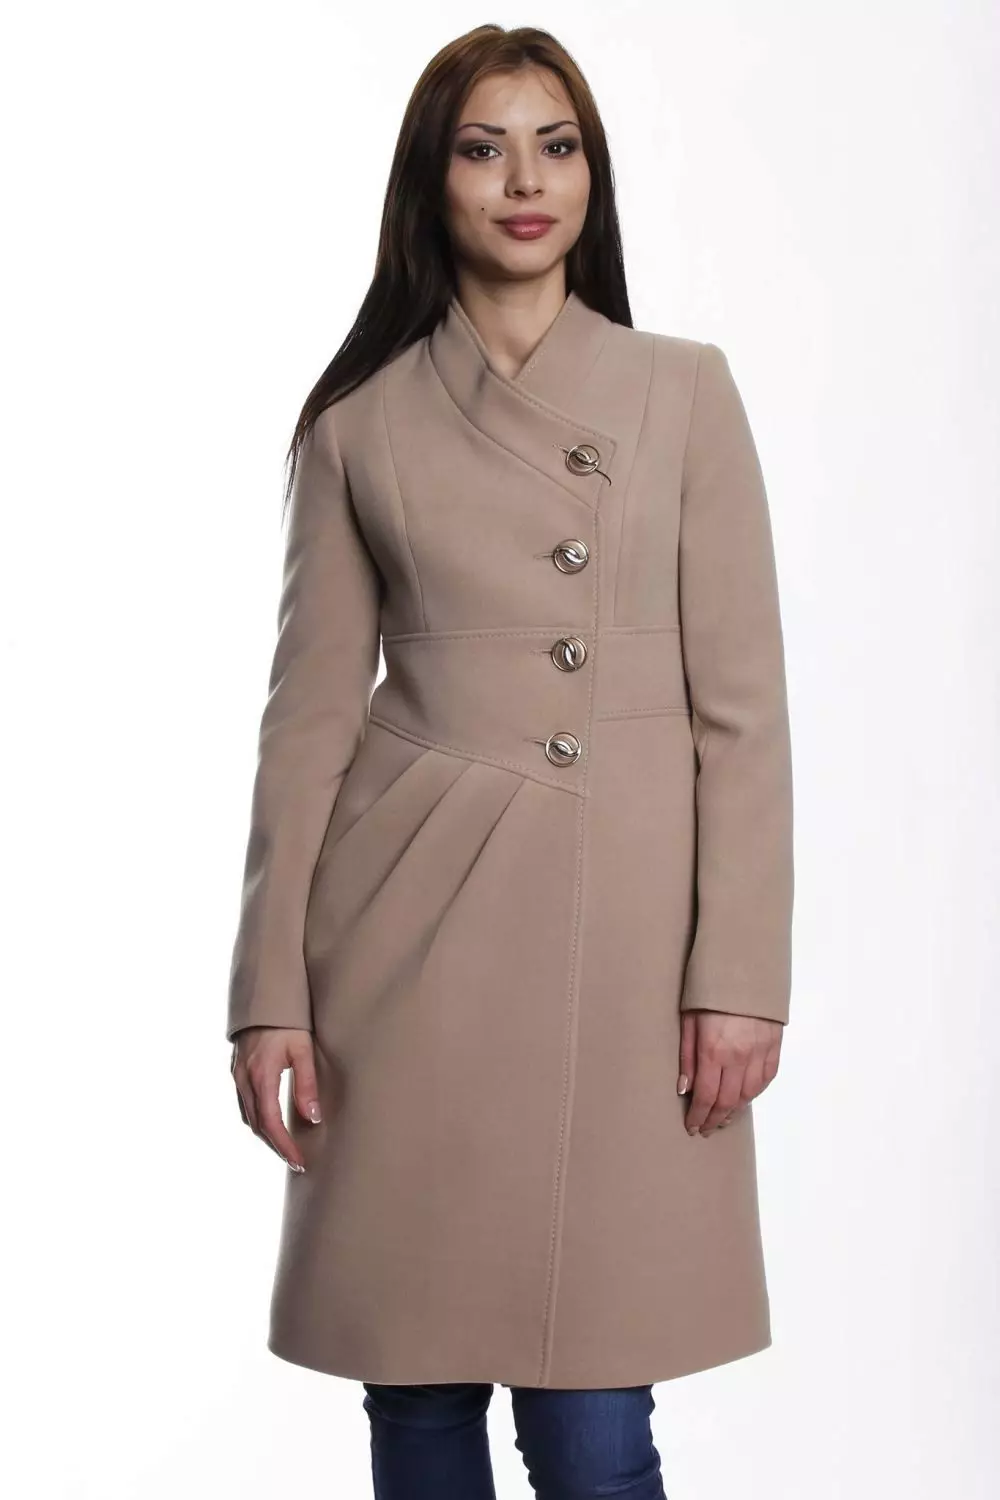 Женски капут пролет 2021 (356 фотографии): од руски производители, модели, стилови и стилови, ватиран, краток, амортизација, кожа 623_206